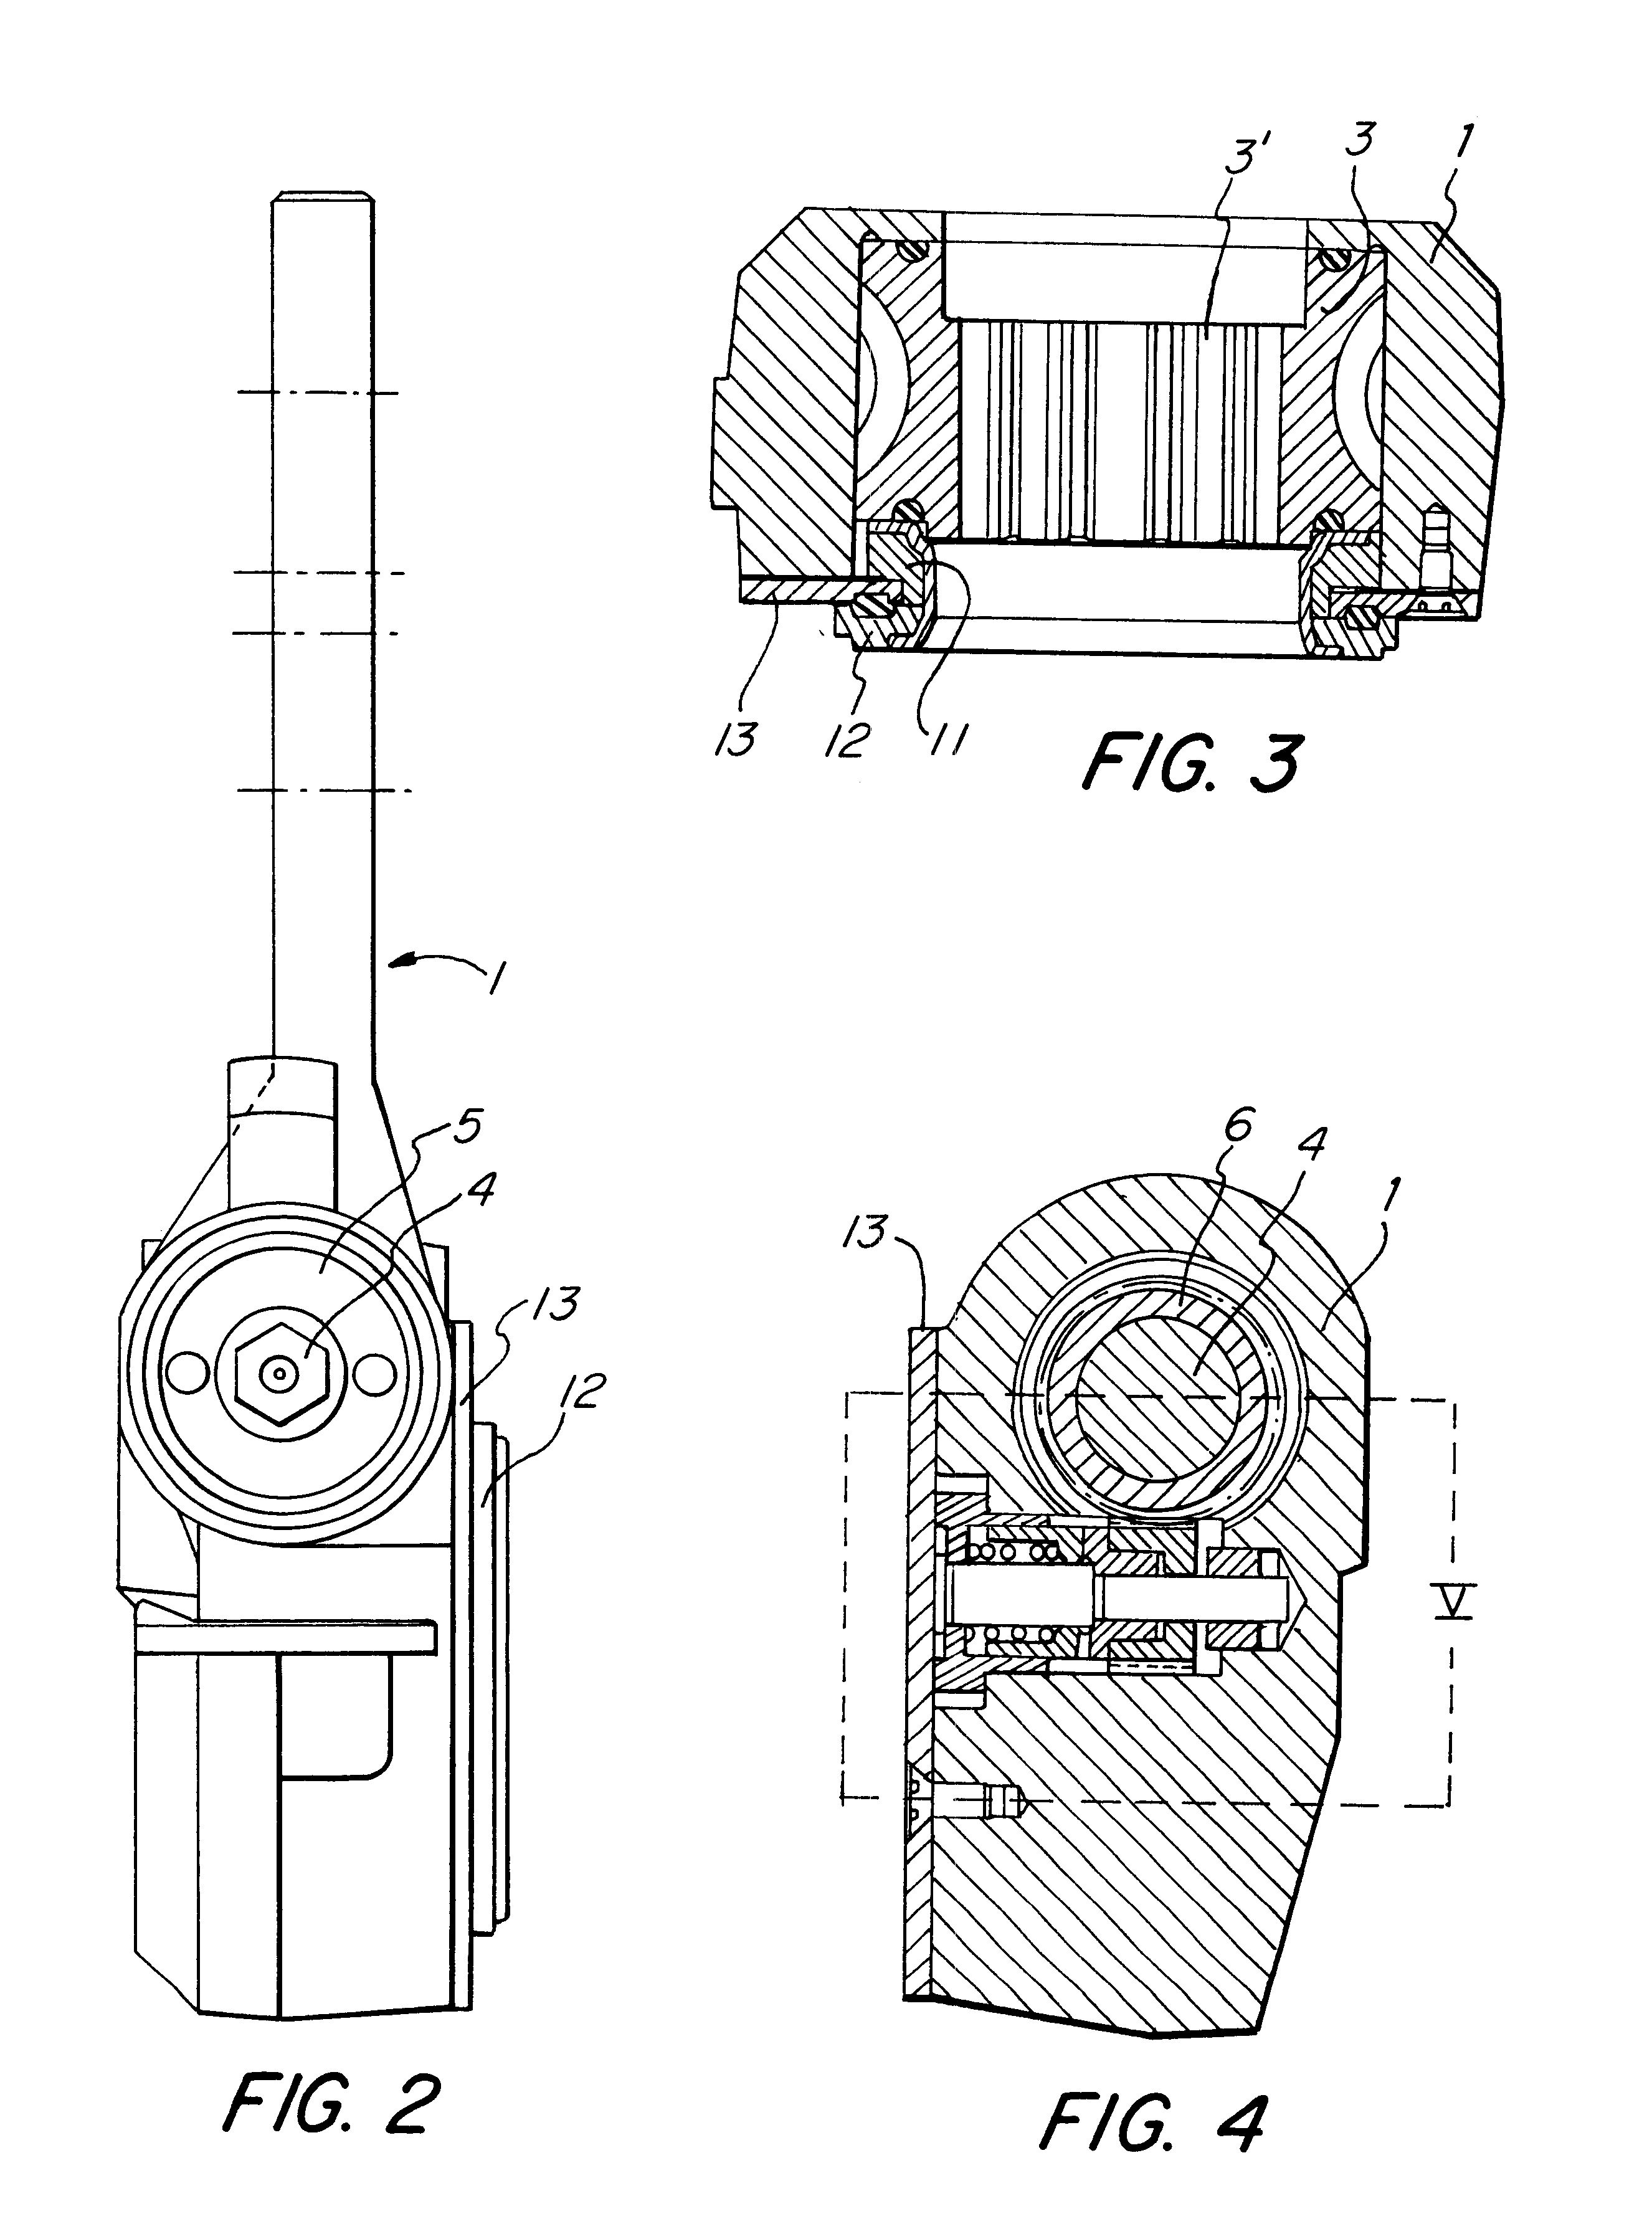 Control arrangement for a brake lever